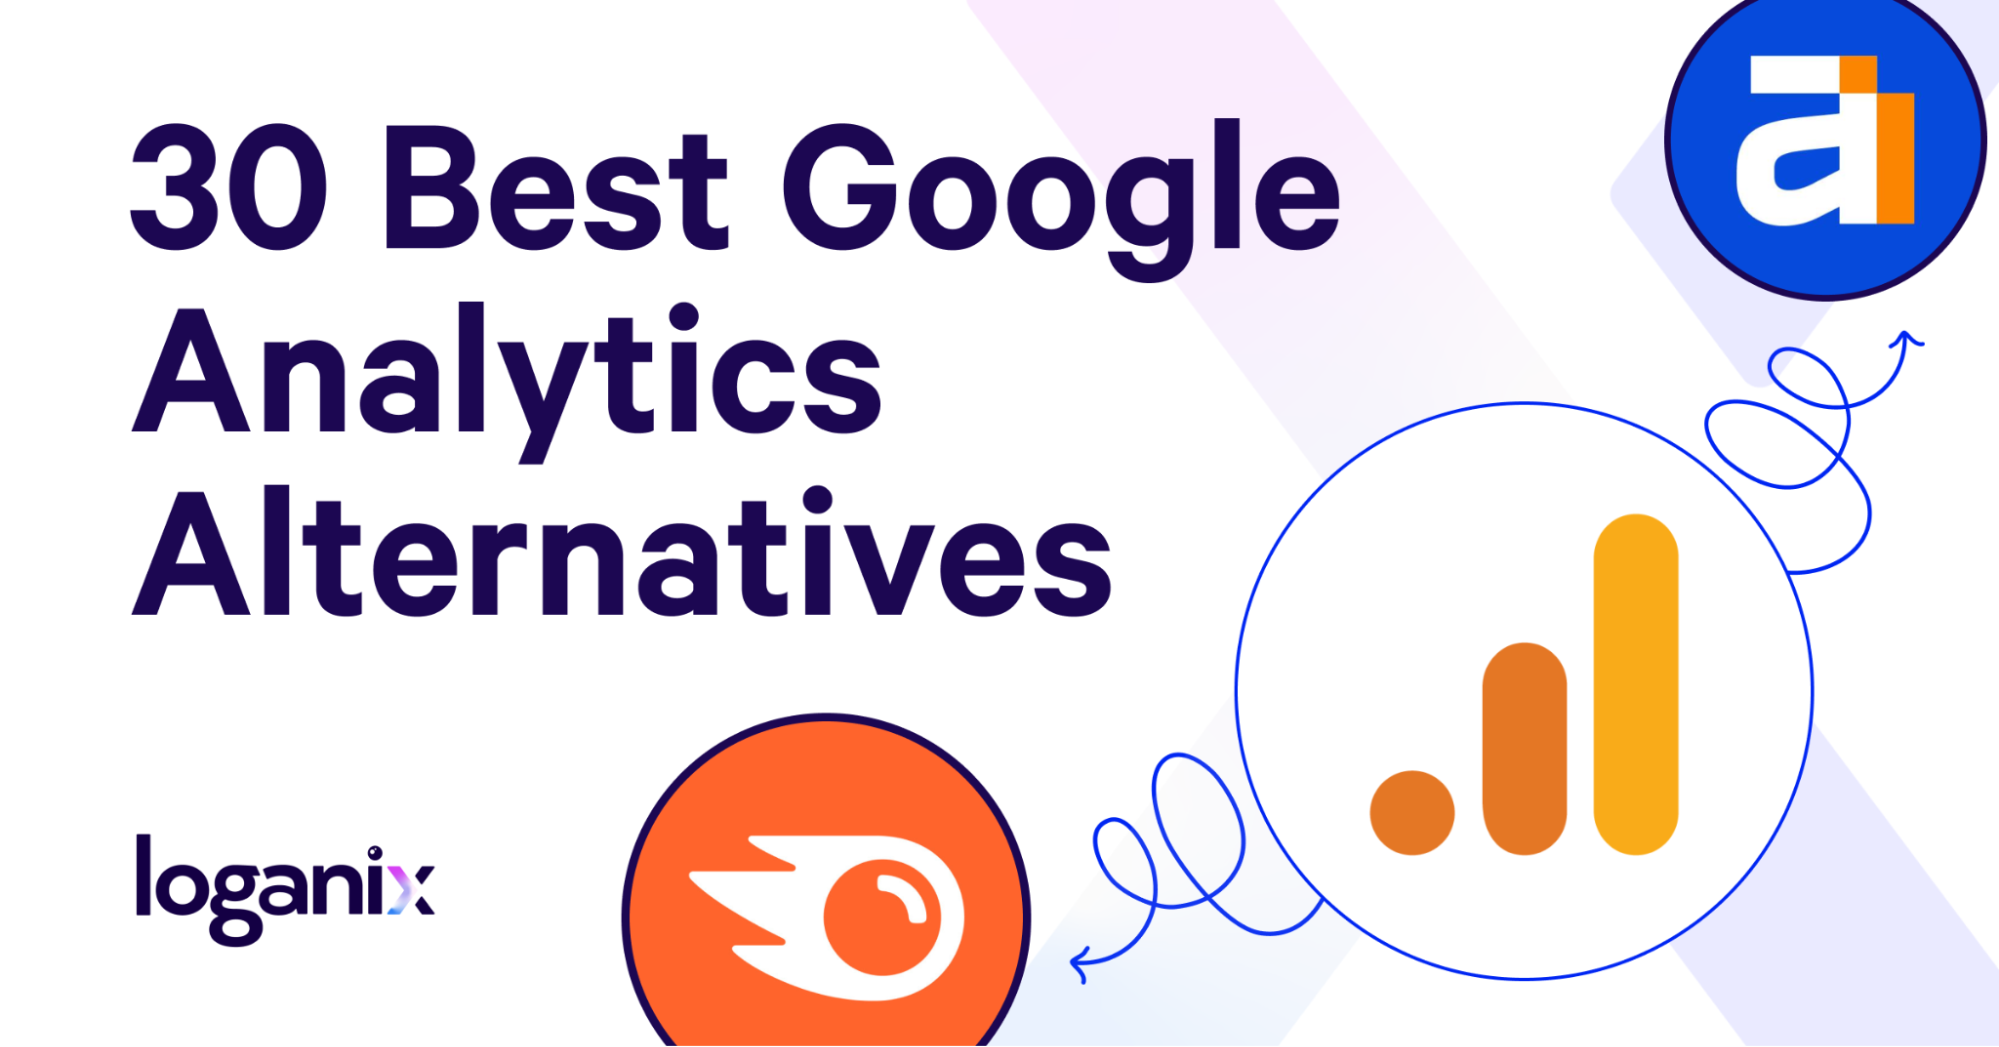 30 Best Google Analytics Alternatives